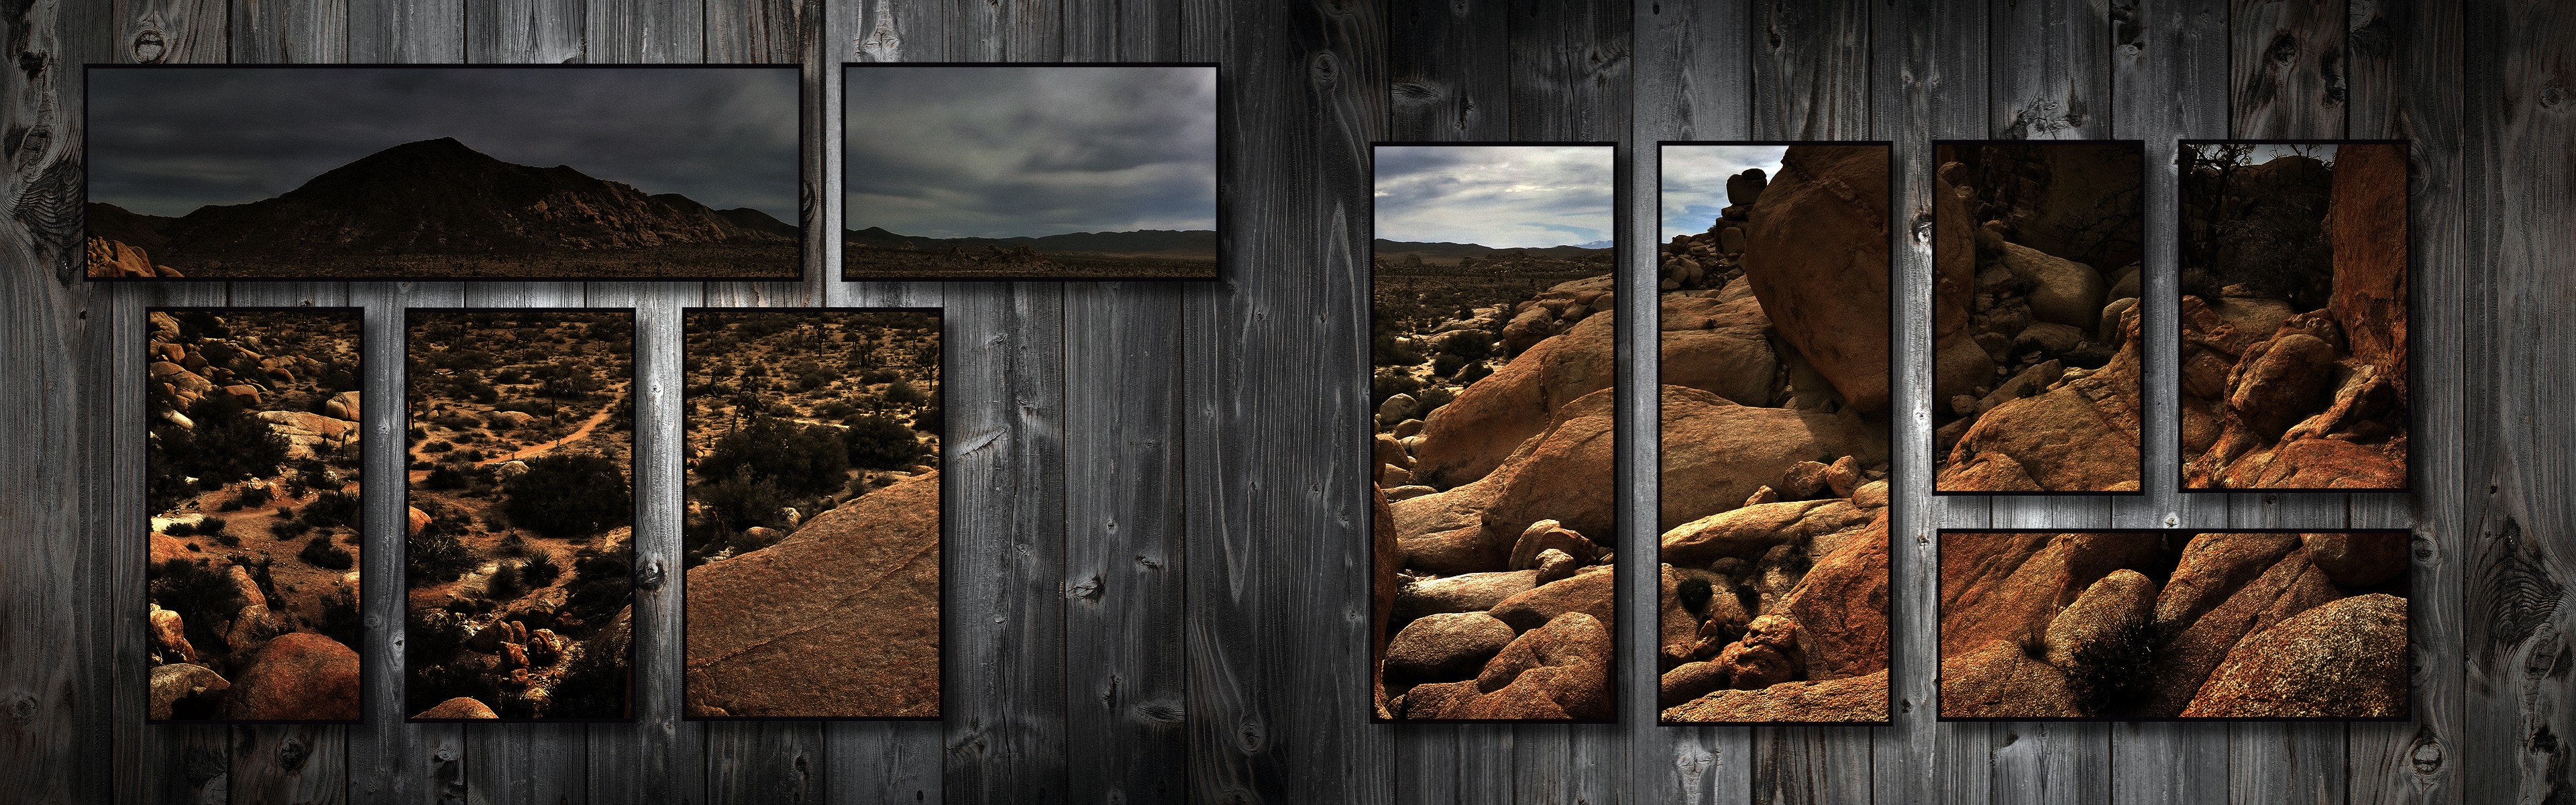 General 3840x1200 digital art collage landscape night rocks